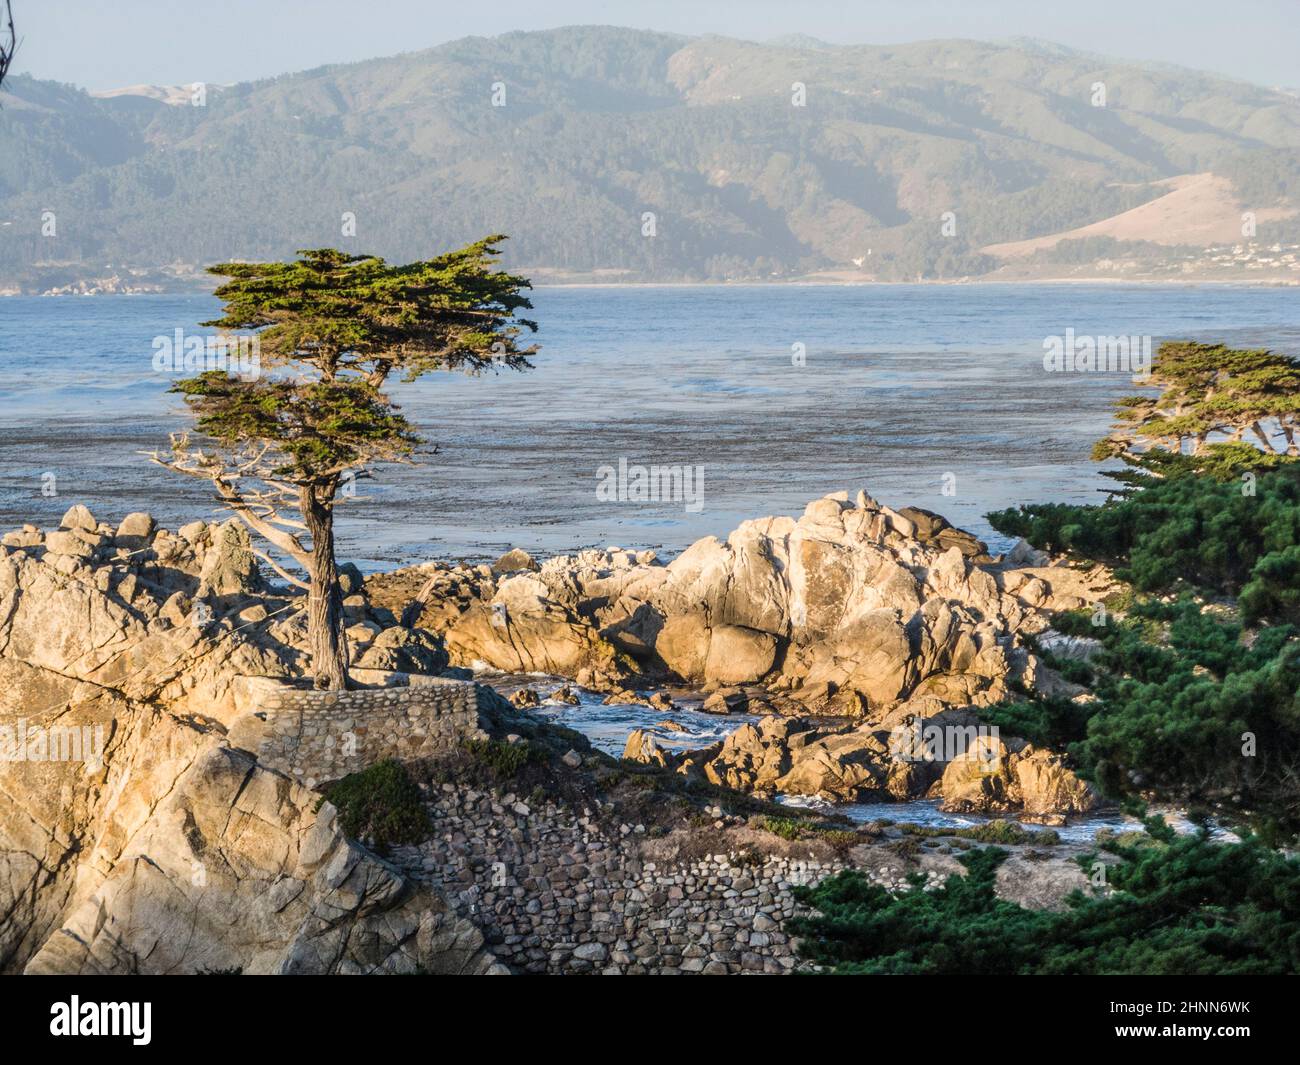 Cypress at the coastline Stock Photo